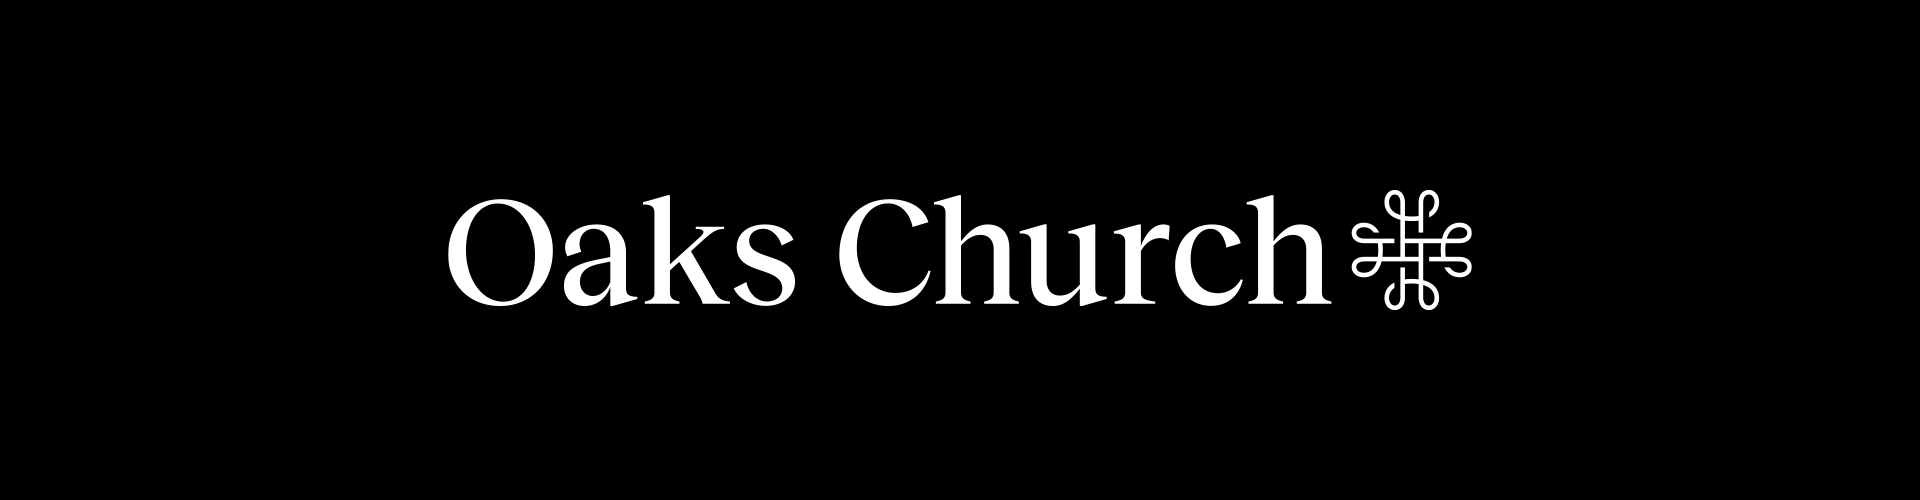 Oaks Church Sermons